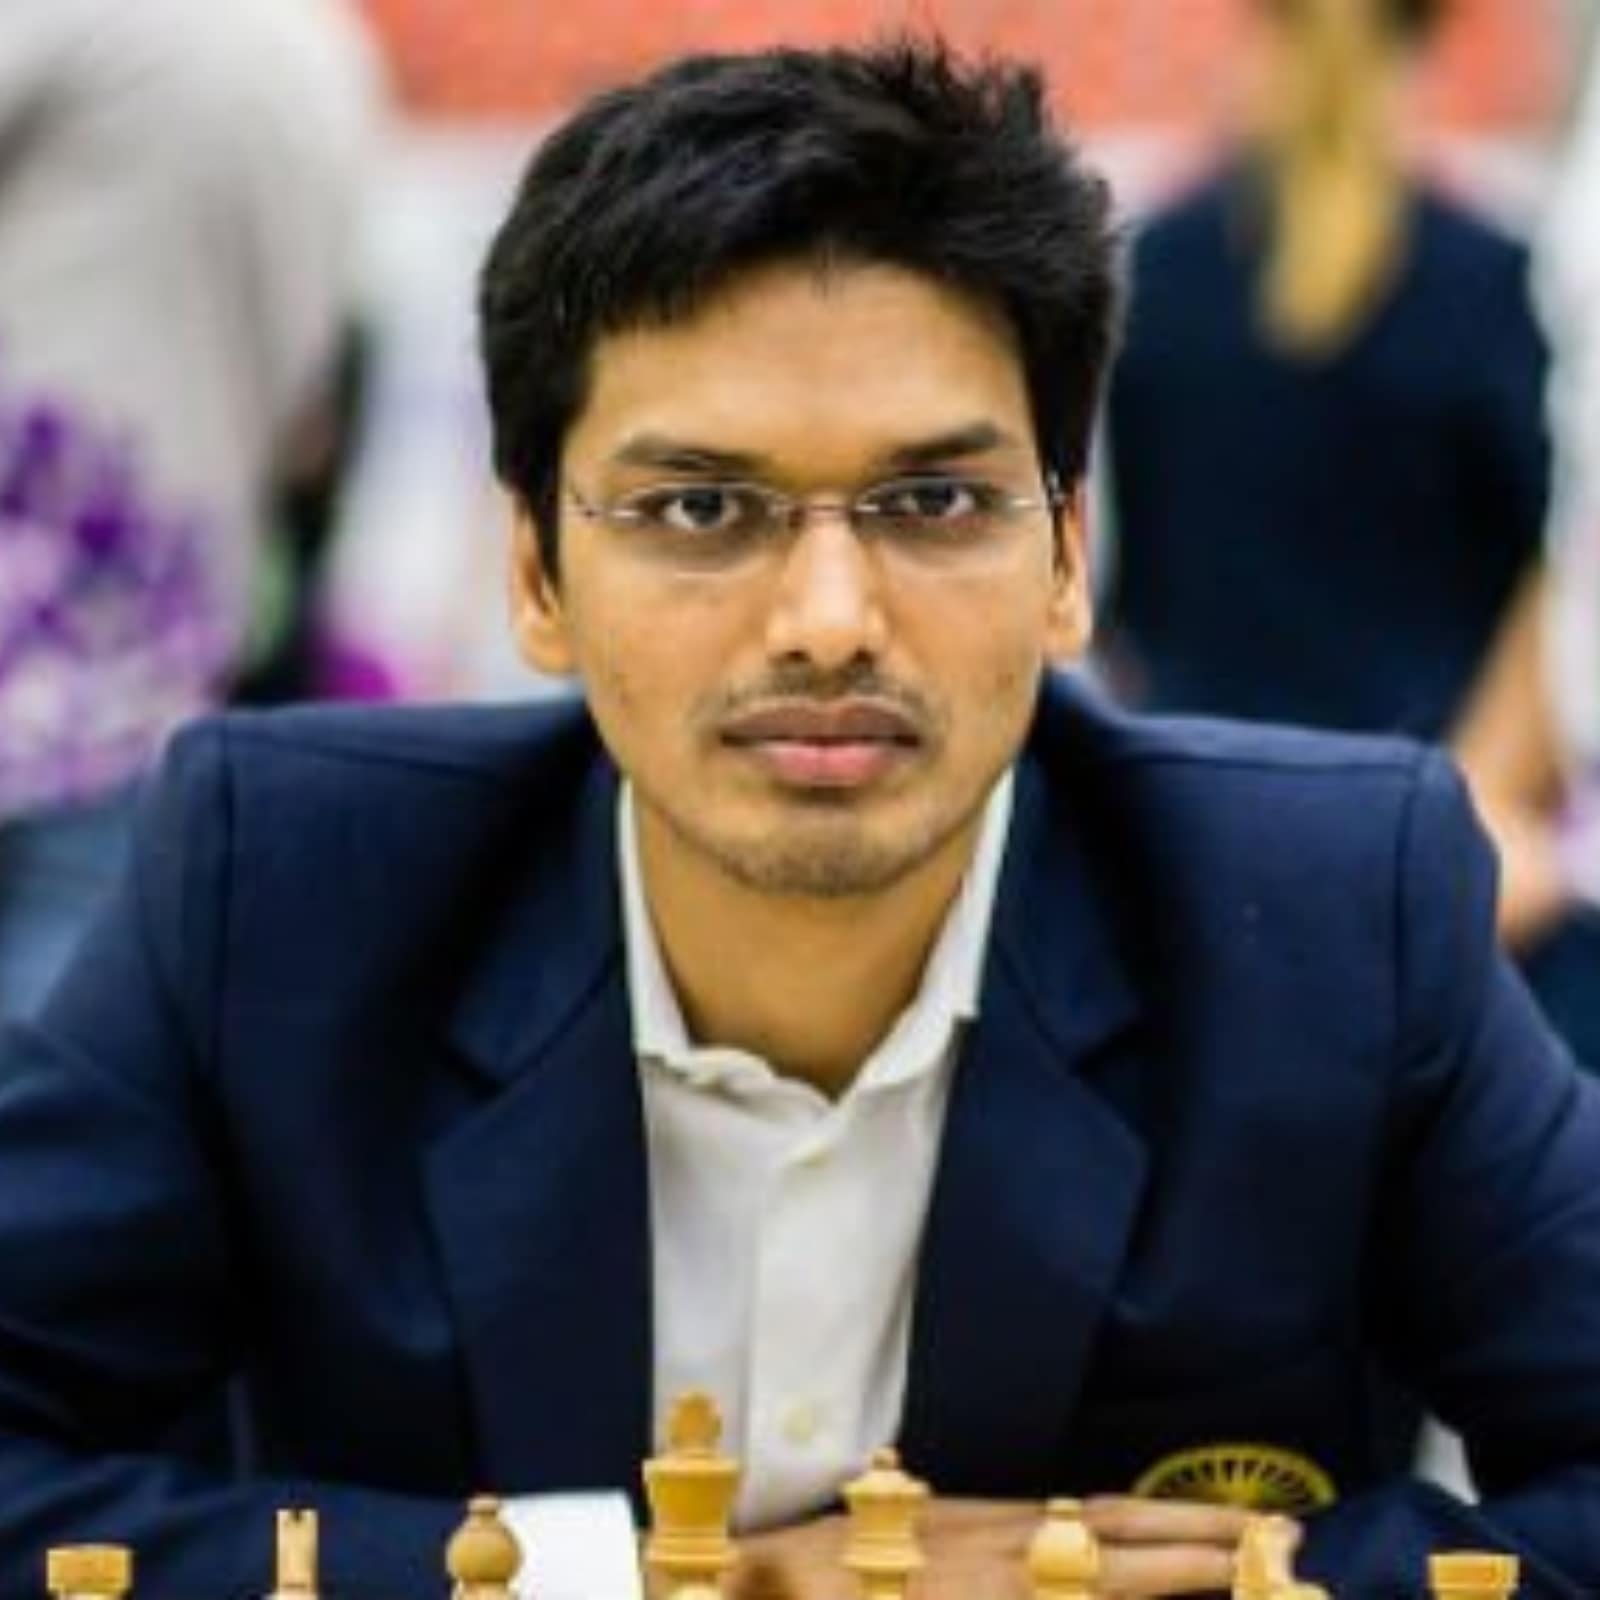 Grand Swiss Chess: P Harikrishna Notches Up Second Win, D